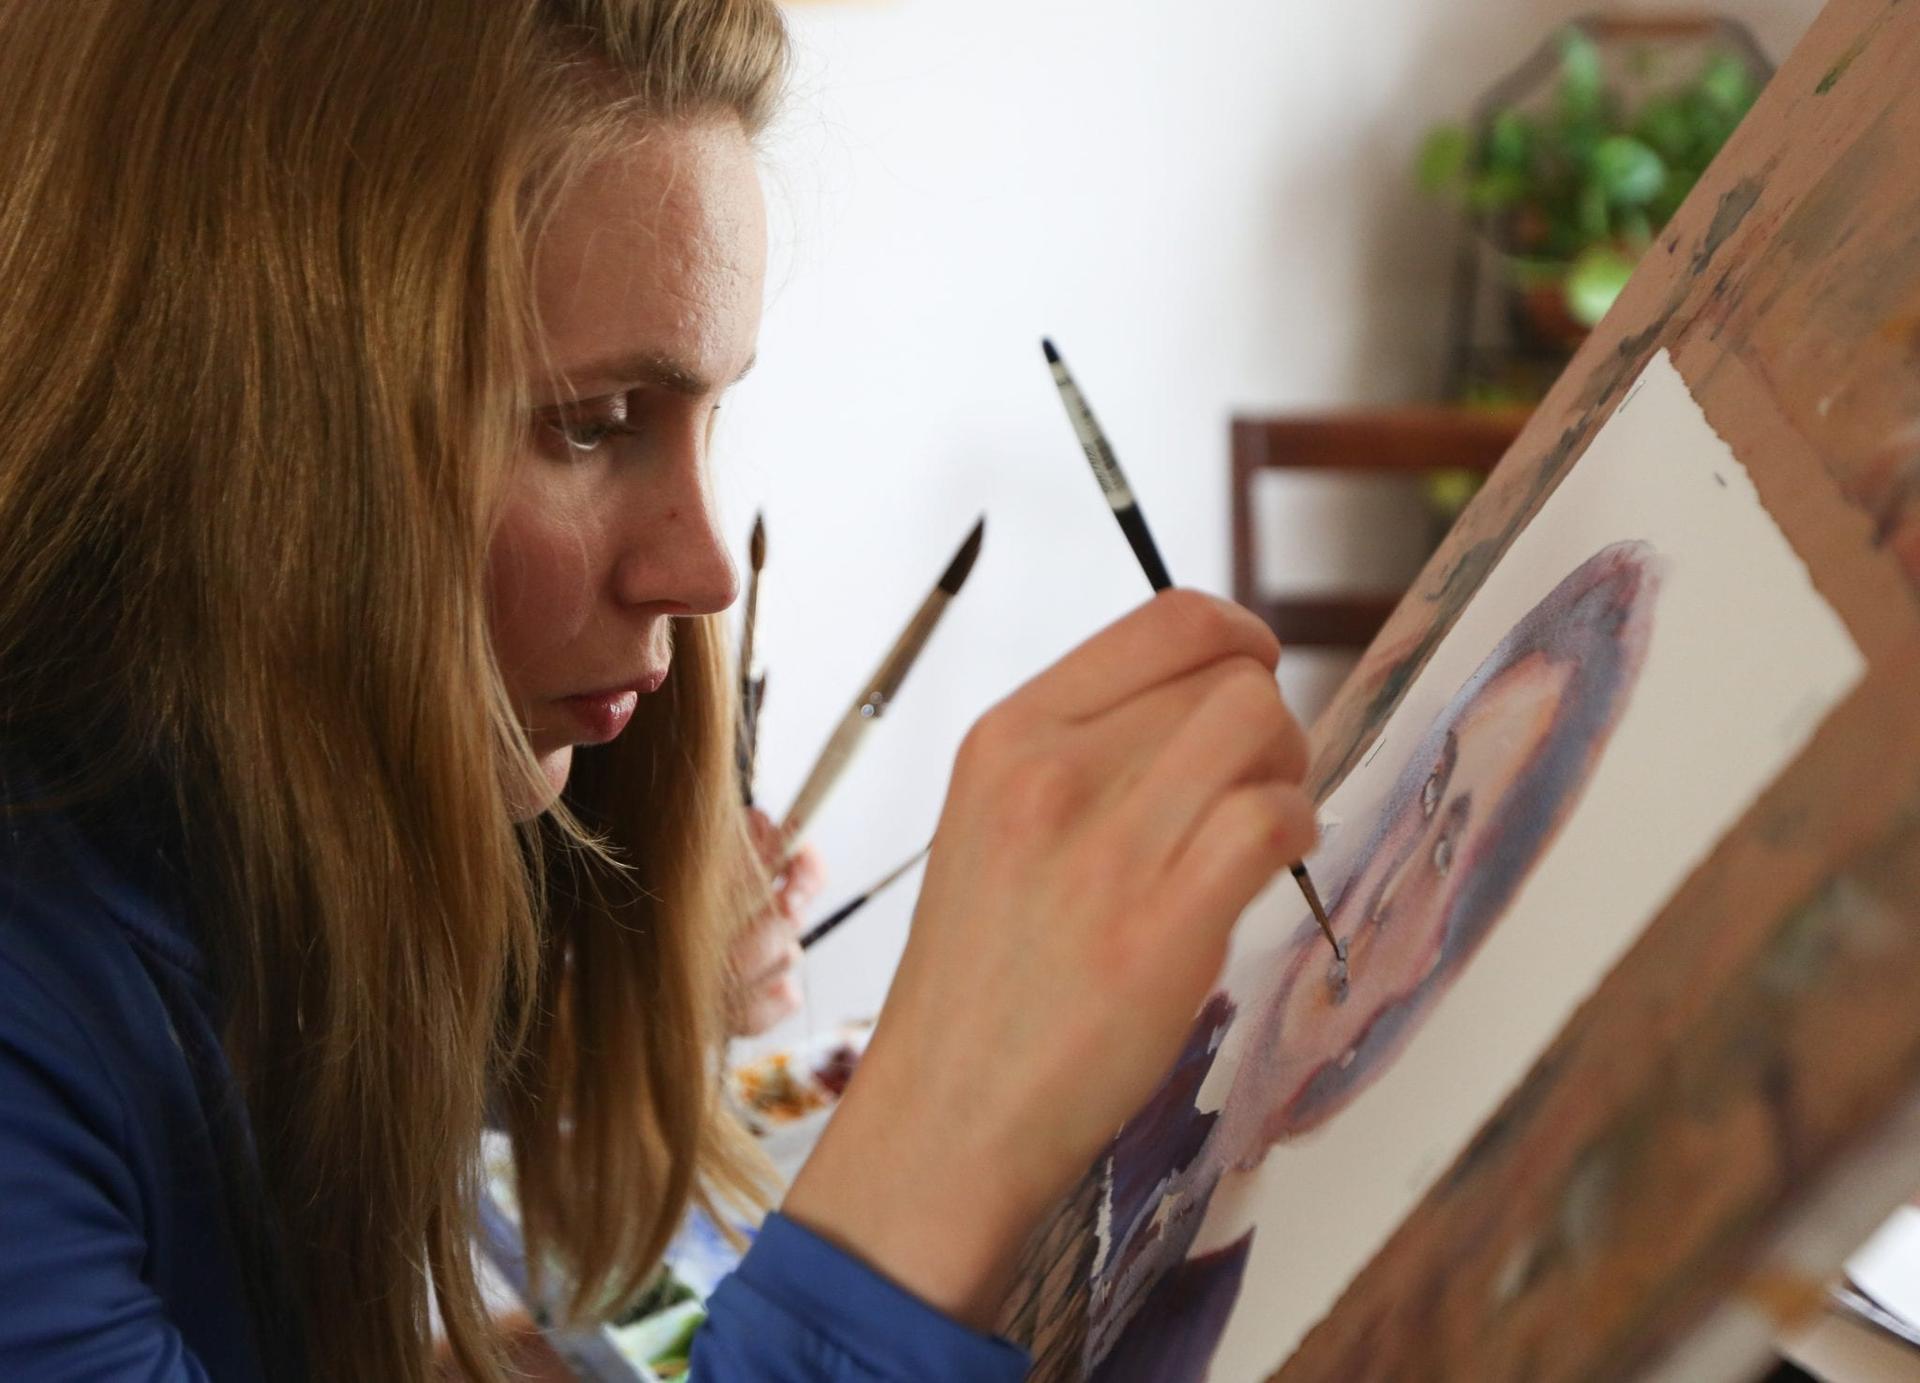 Painting portraits of modern saints ‘has changed’ artist’s spiritual life